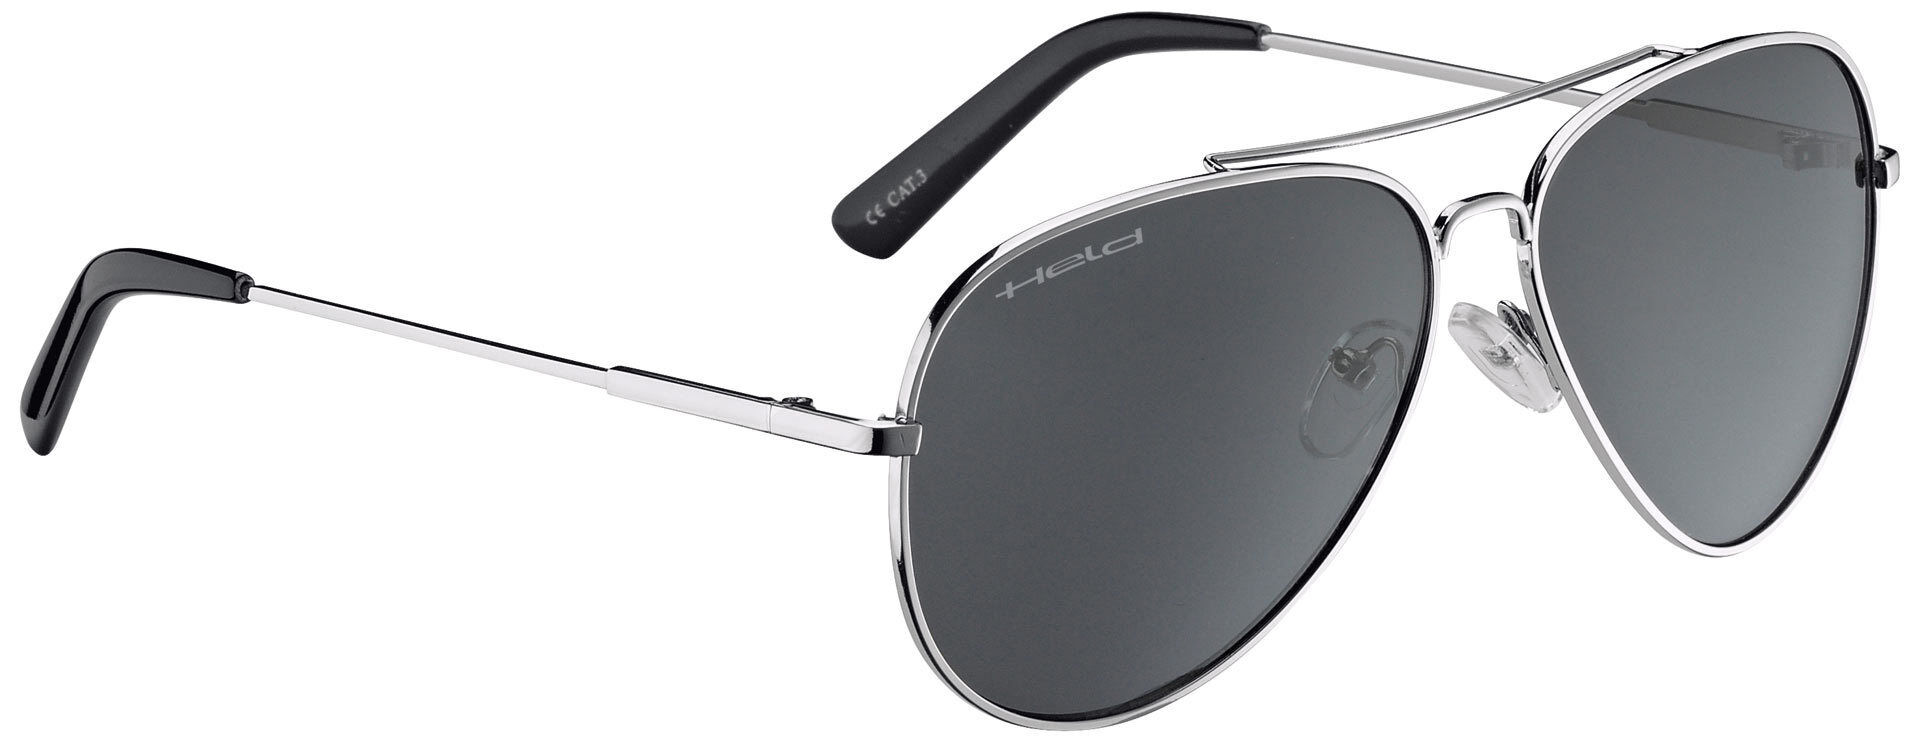 Held Sunglasses 9754  - Black Grey